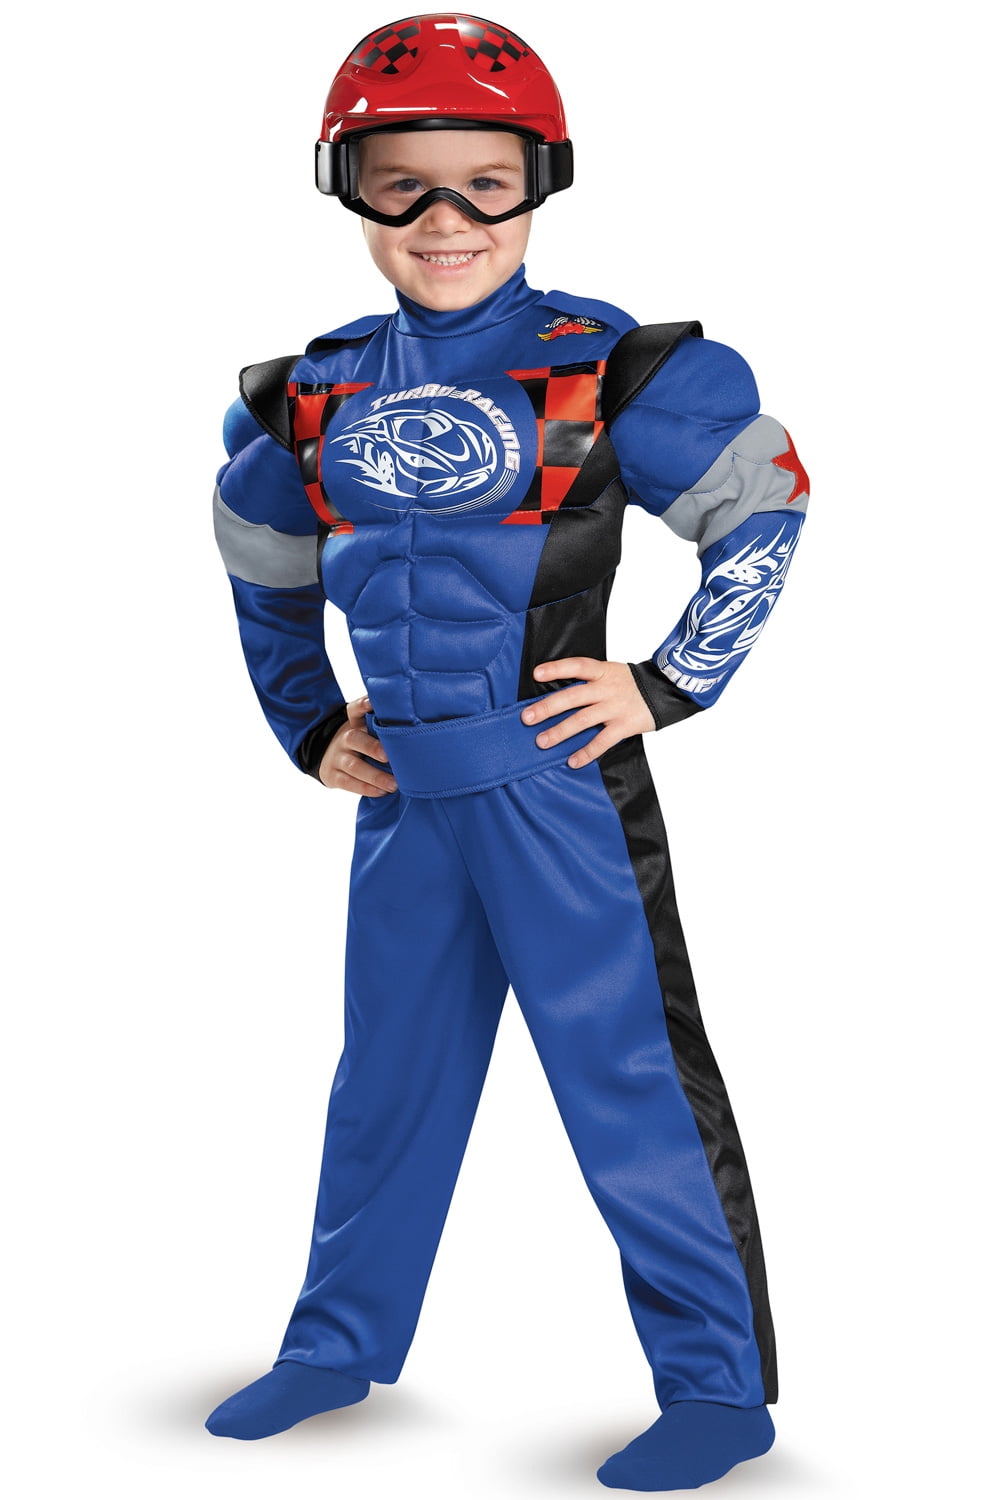 race car driver toddler muscle costume, large (4-6) - Walmart.com